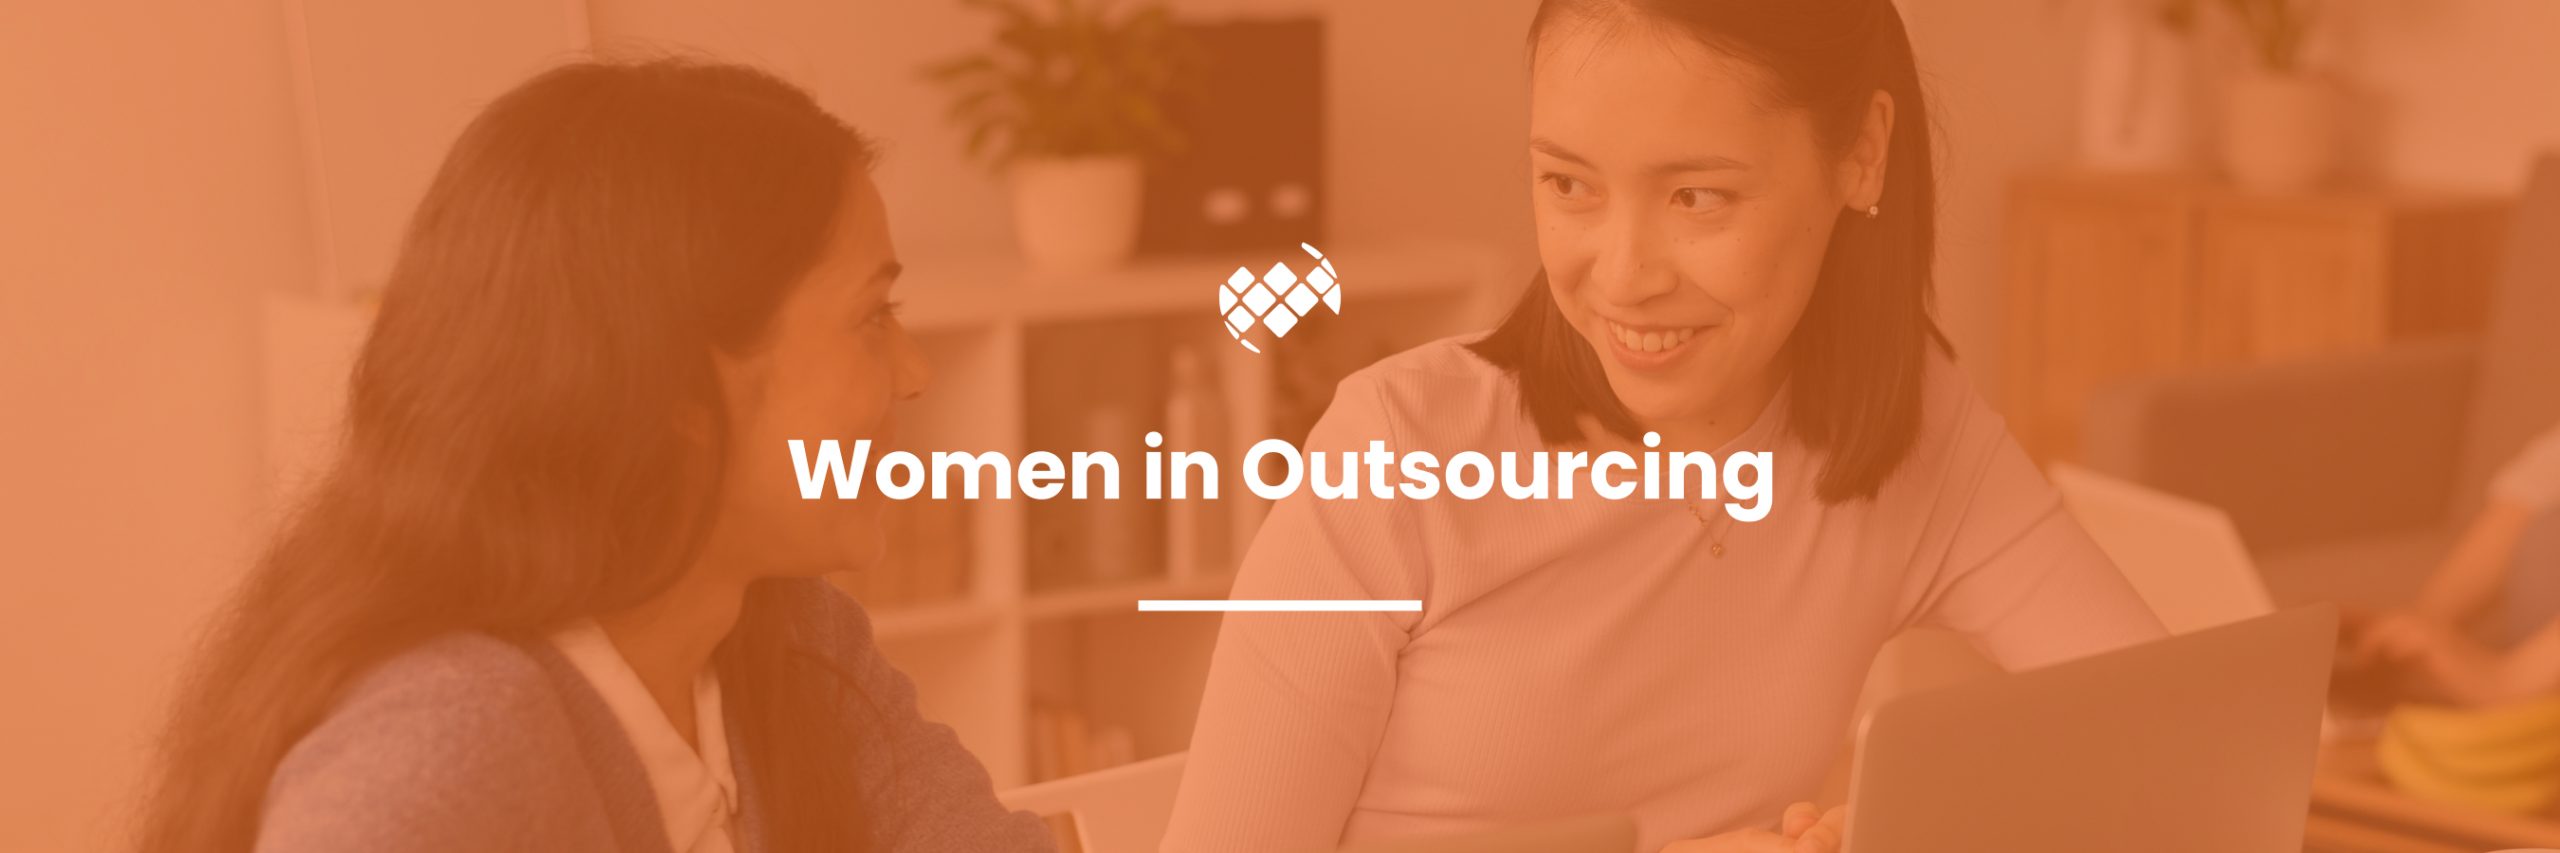 Women in Outsourcing